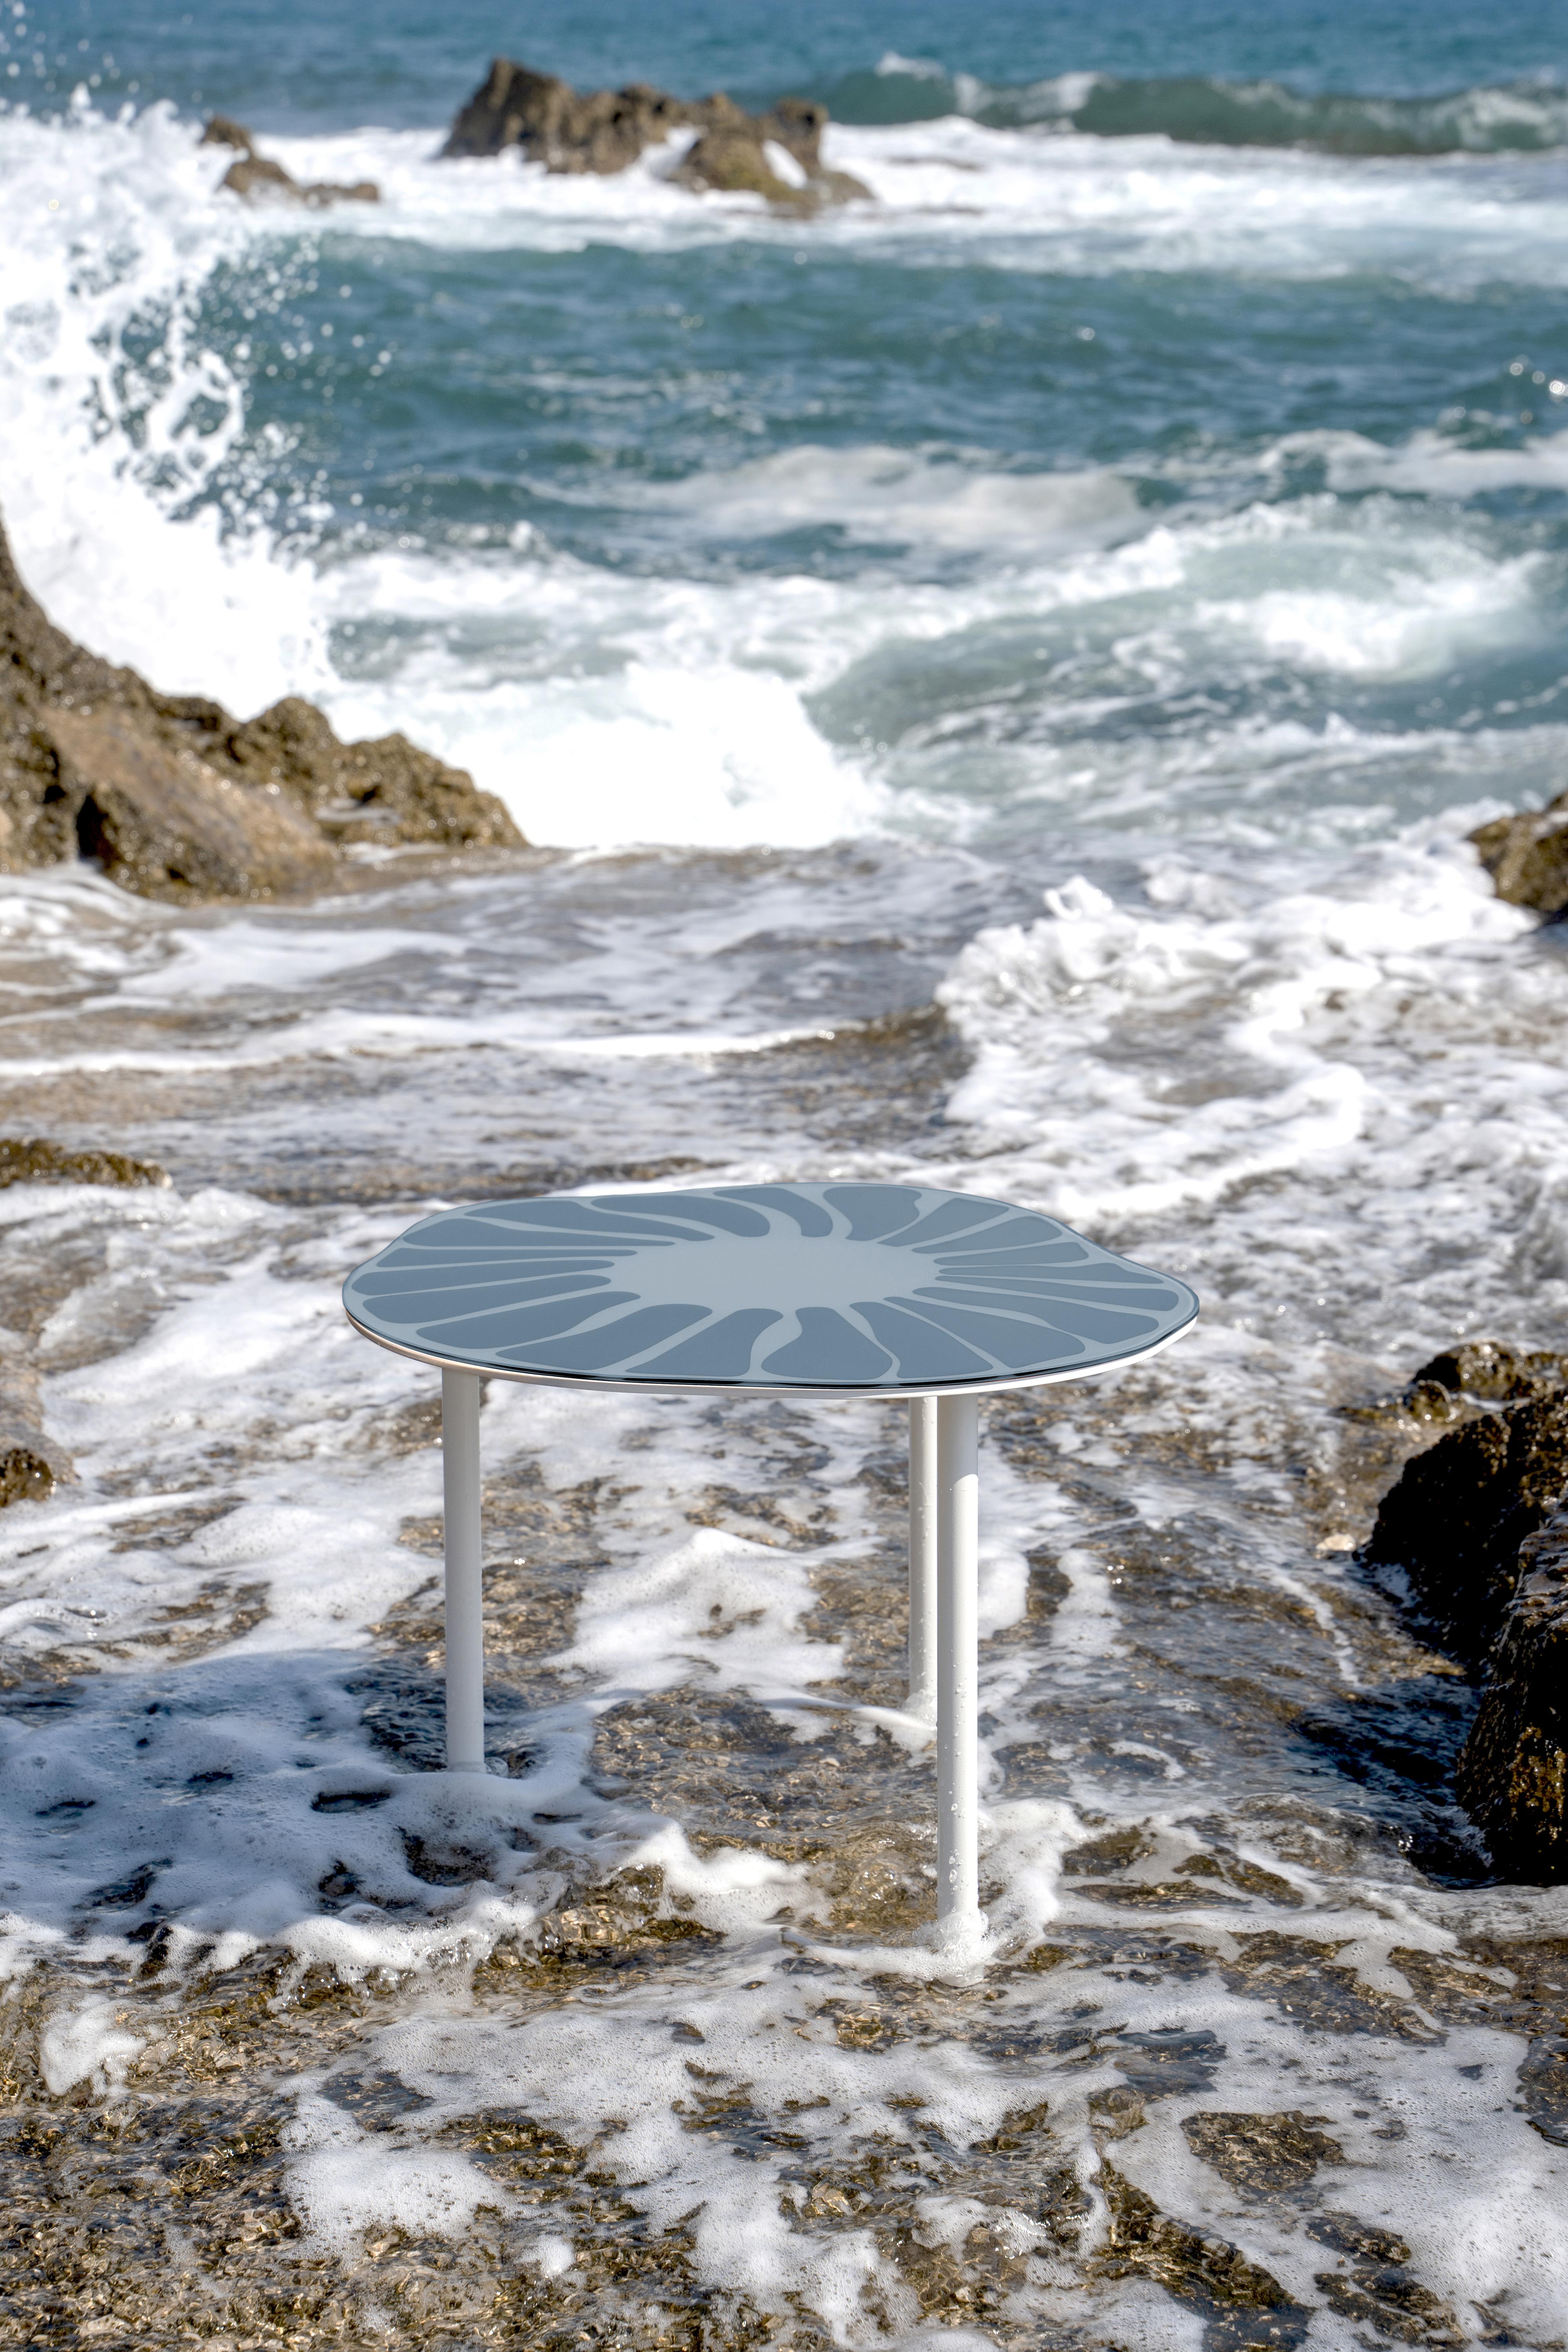 Cesareo è un coffee table realizzato in superfici specchianti, accuratamente selezionate, e metallo laccato con finitura opaca.
Das Produkt zeichnet sich durch morbide und auffällige Linien aus, die die natürliche Umgebung widerspiegeln.
Die Forma